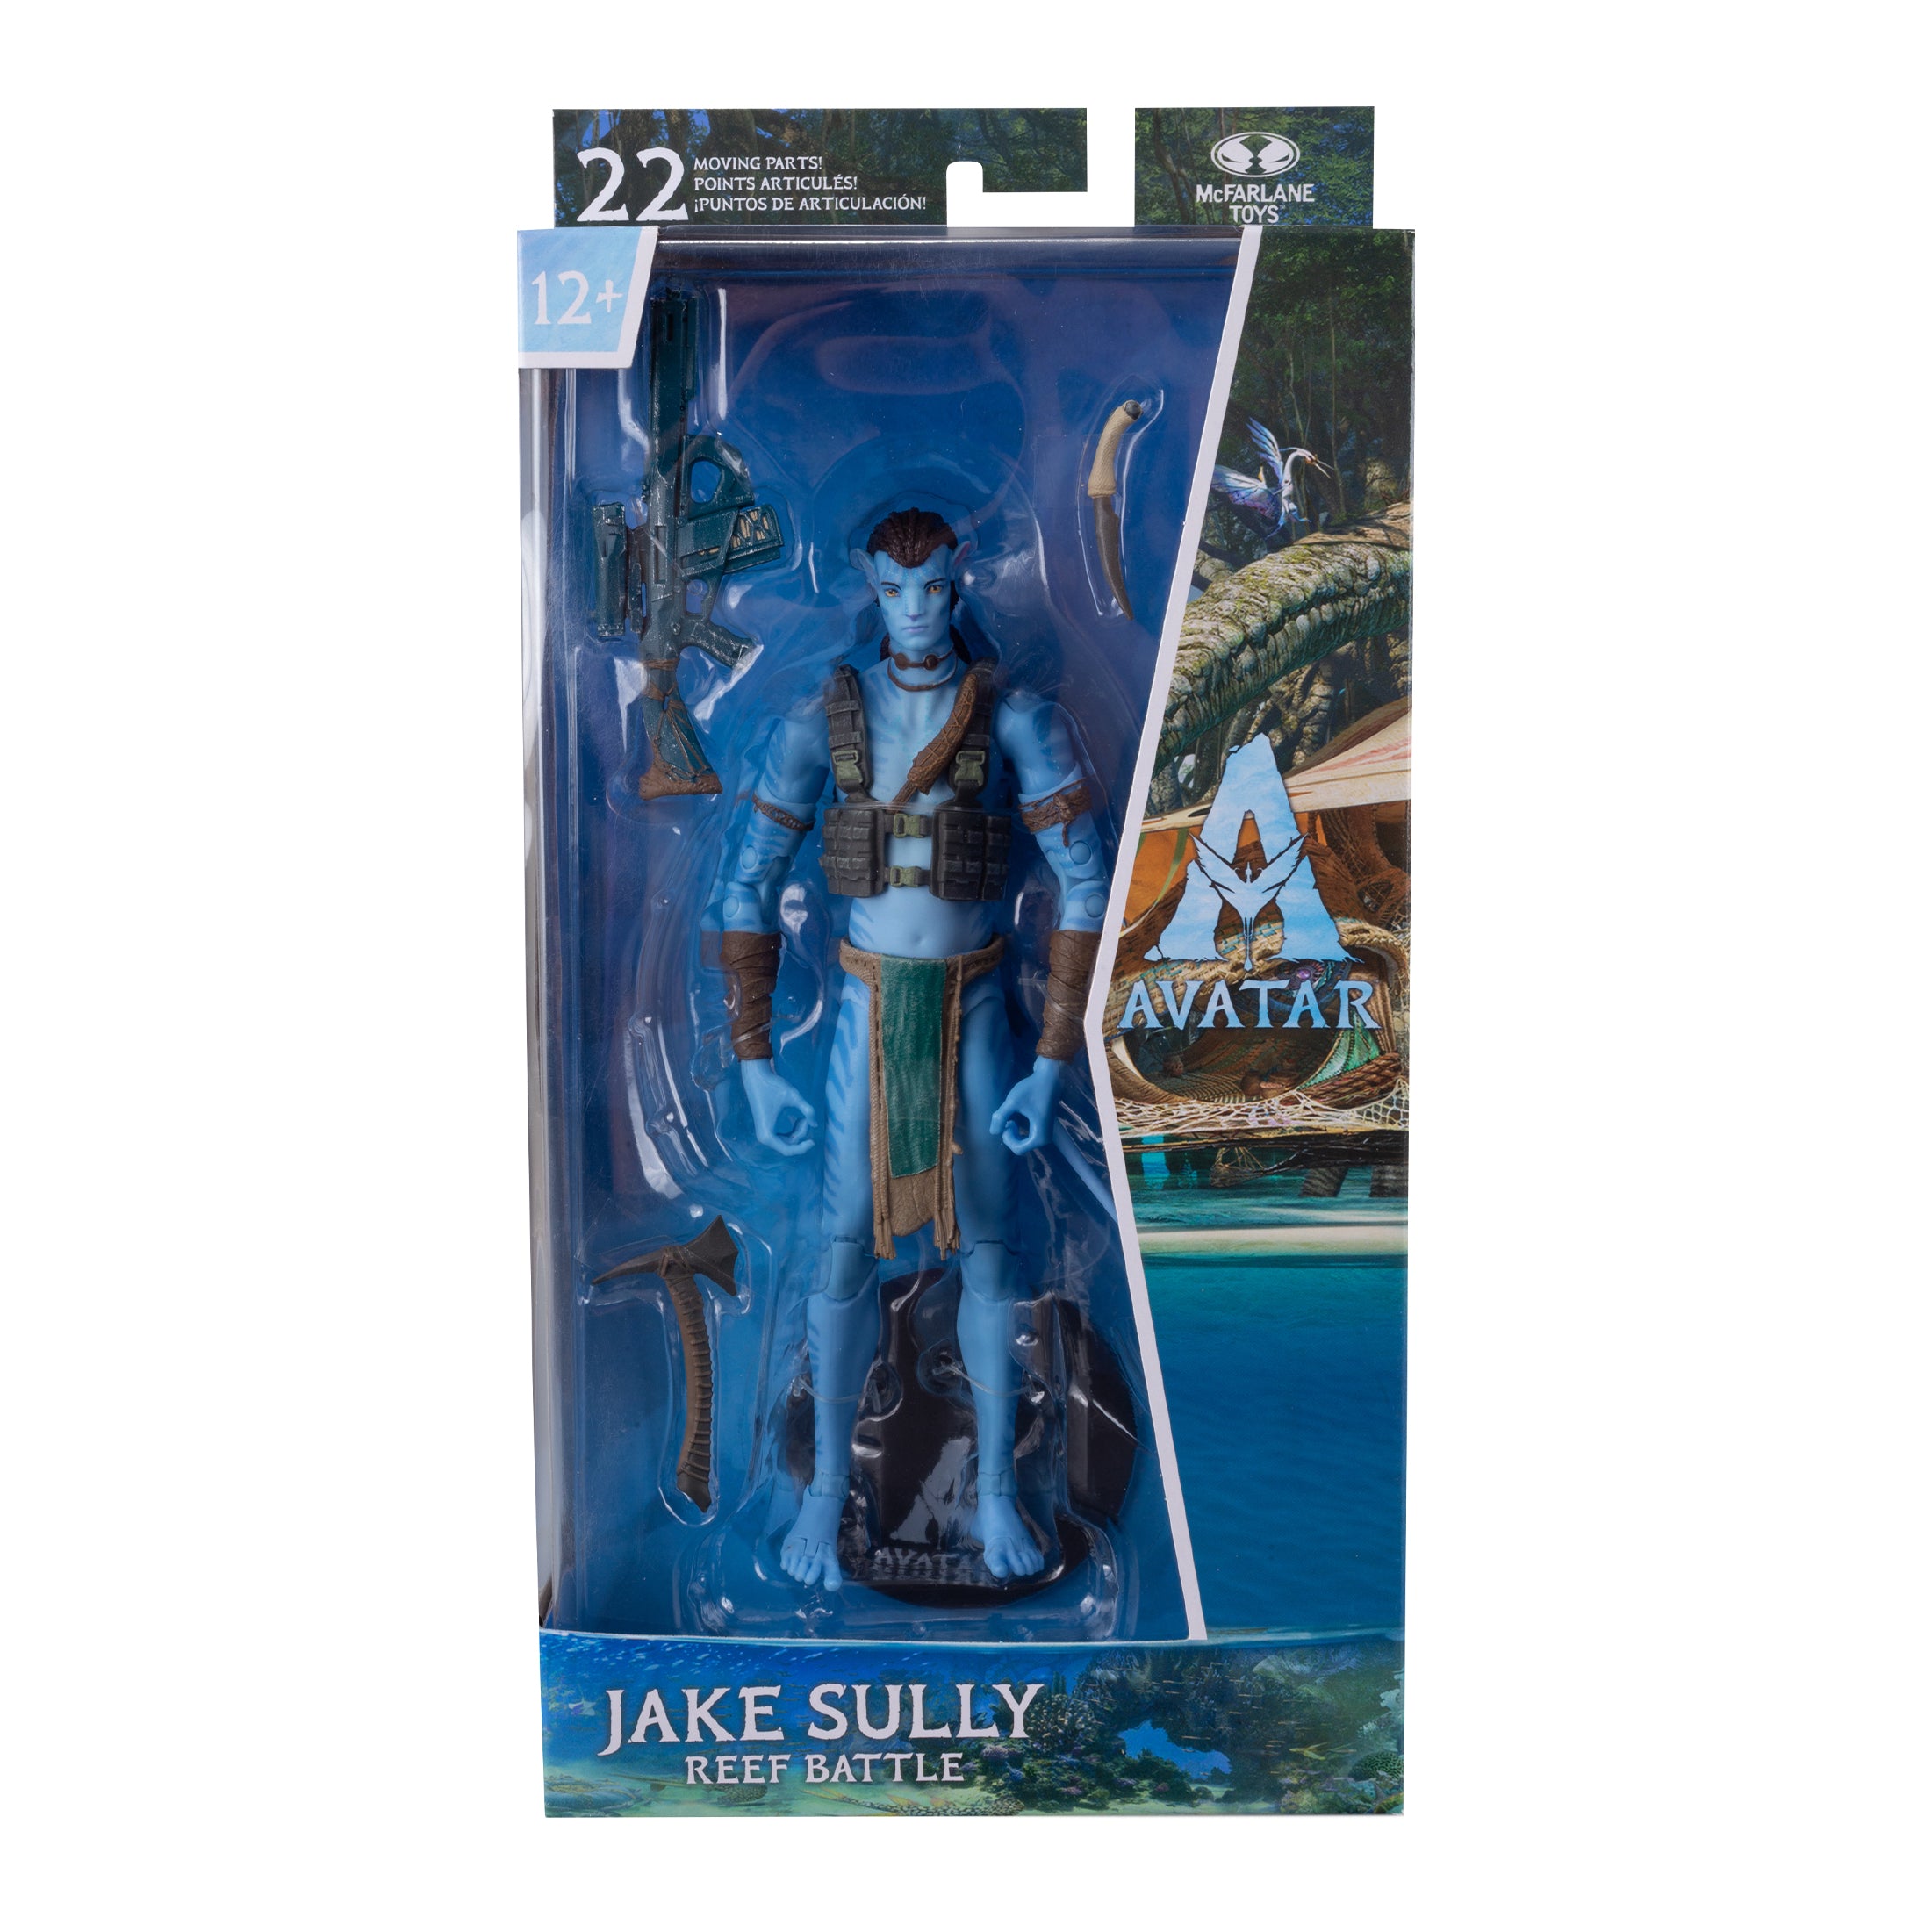 McFarlane Figura de Accion: Disney Avatar Way of Water - Jake Sully Reef Battle 7 Pulgadas